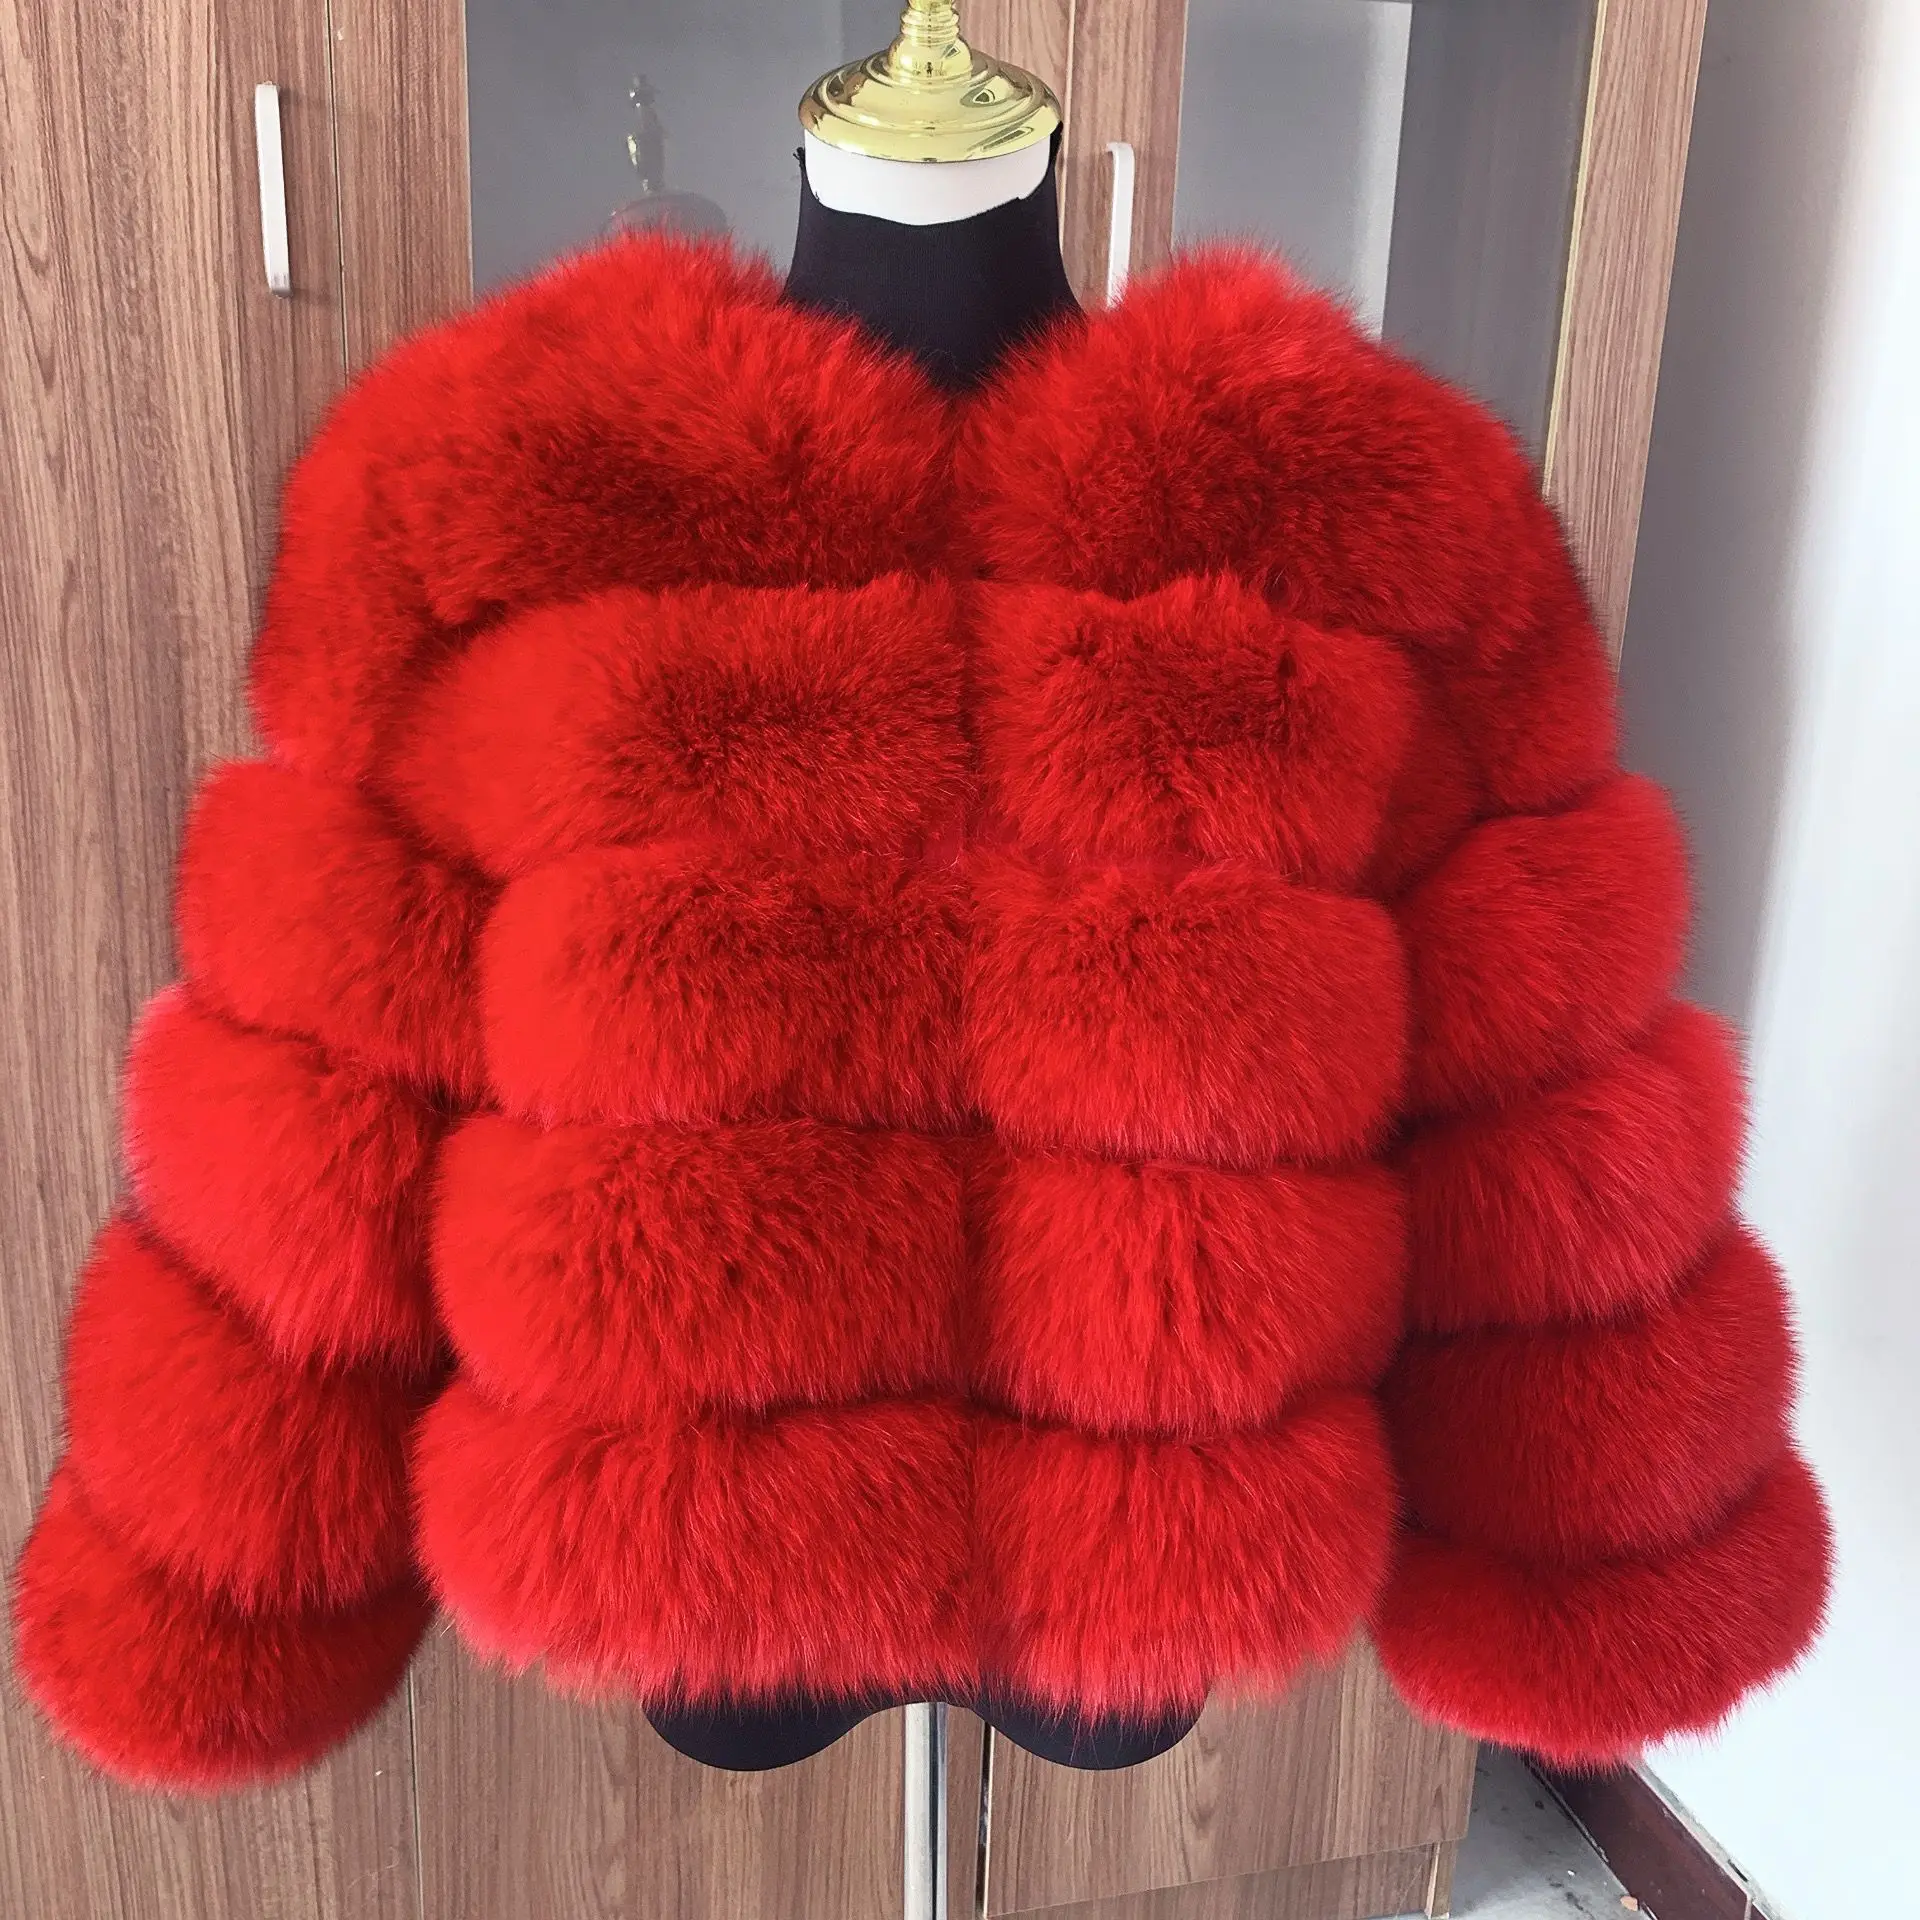 women new style real fur coat luxury winter coat jacket very warm fashion Authentic fox fur coat raccoon fur coat Free shipping enlarge